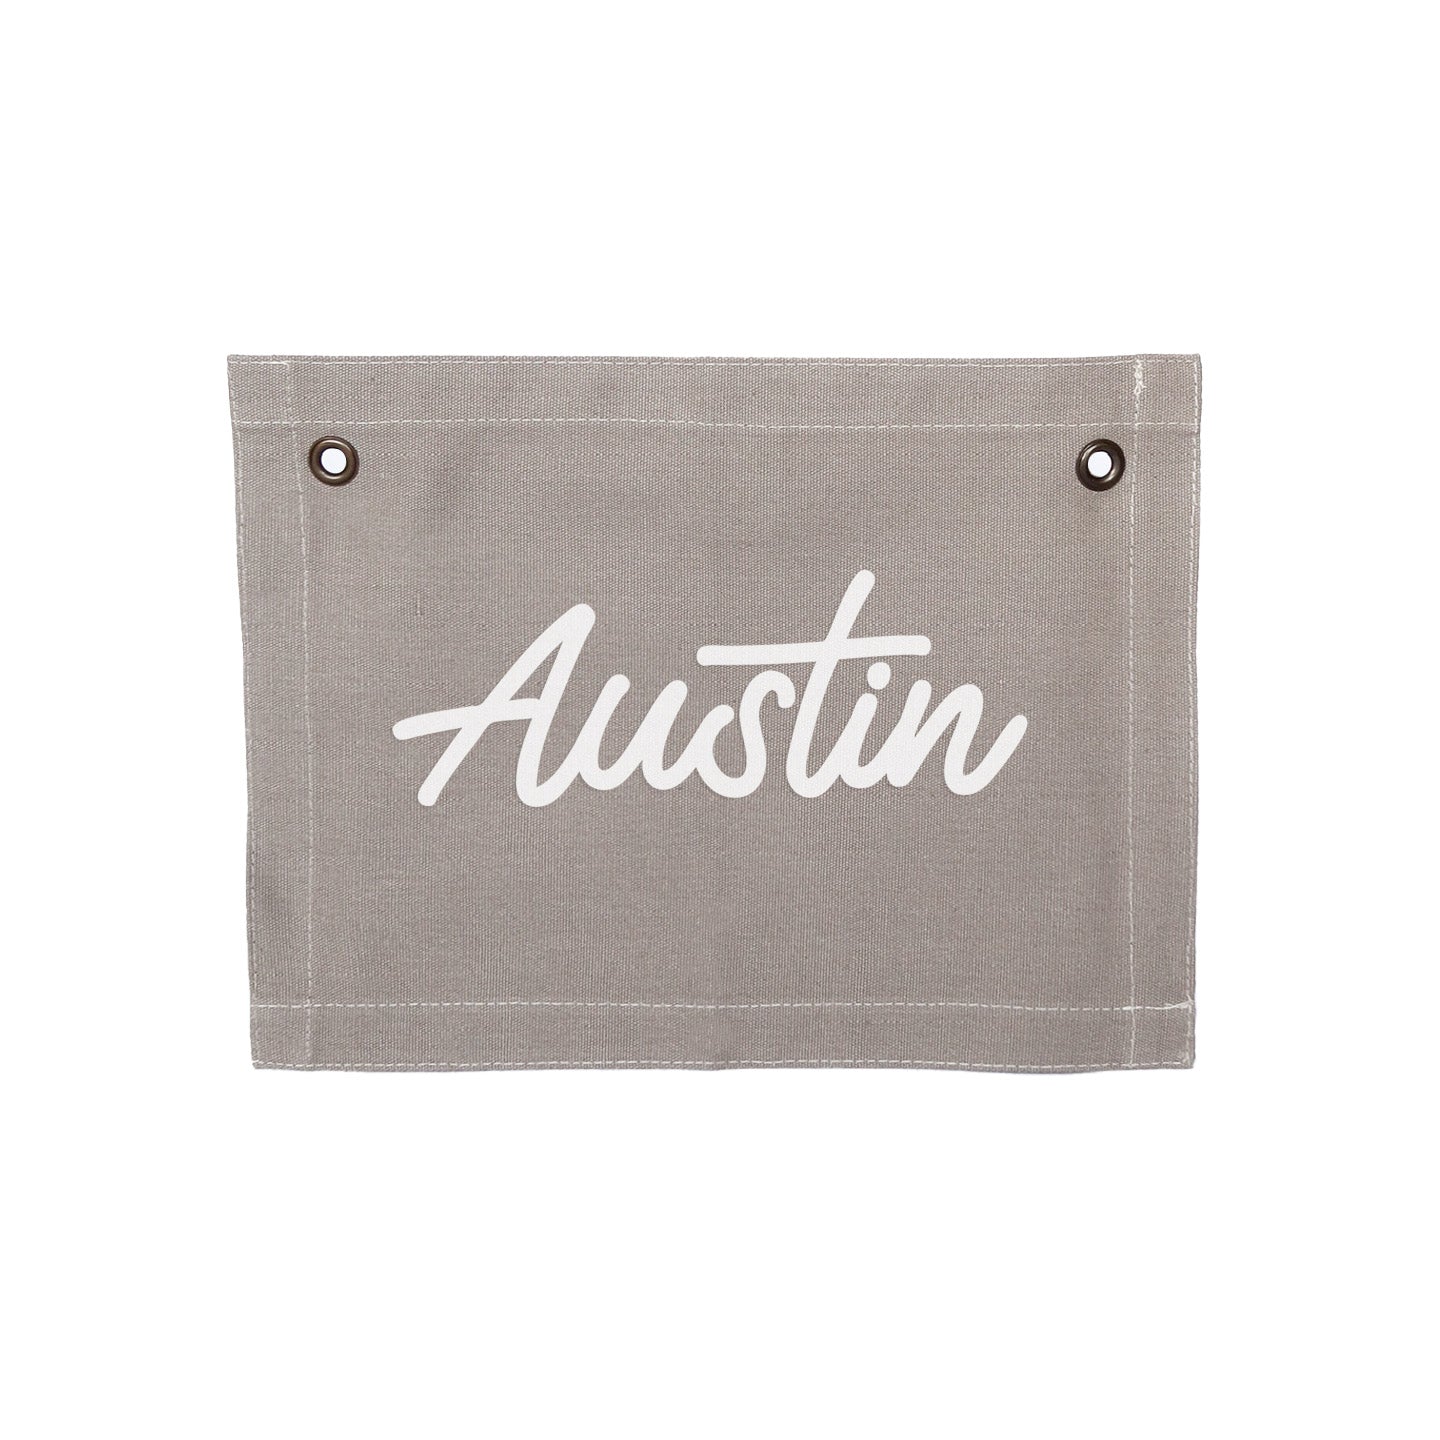 Austin Cursive Small Canvas Flag